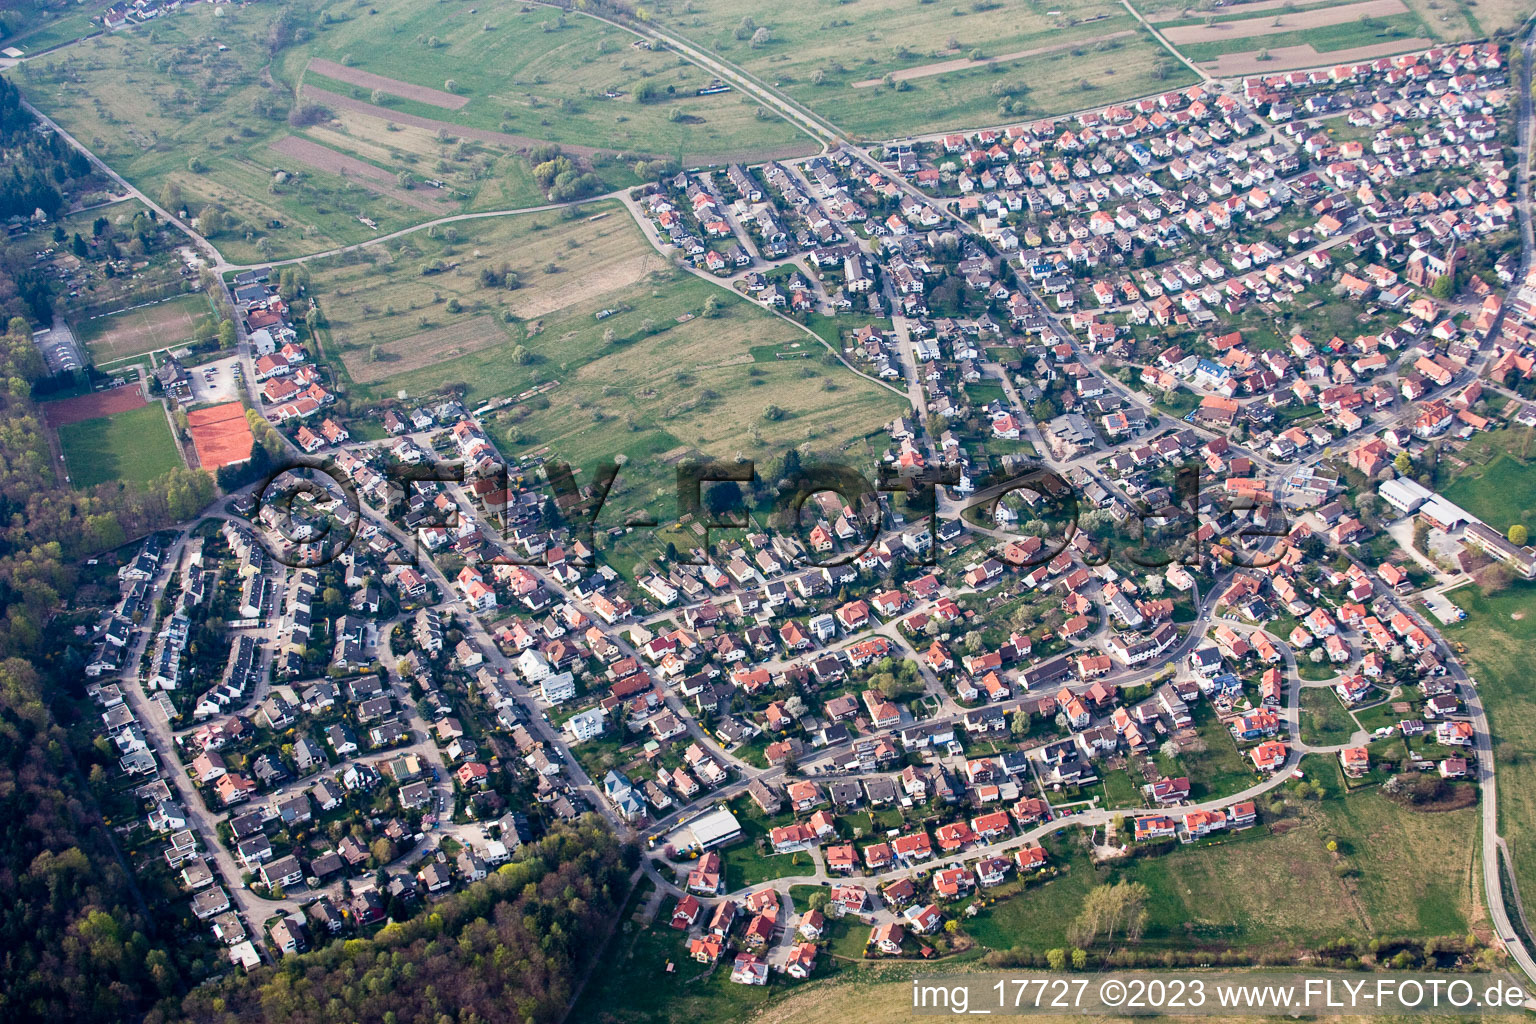 Drone recording of District Schöllbronn in Ettlingen in the state Baden-Wuerttemberg, Germany